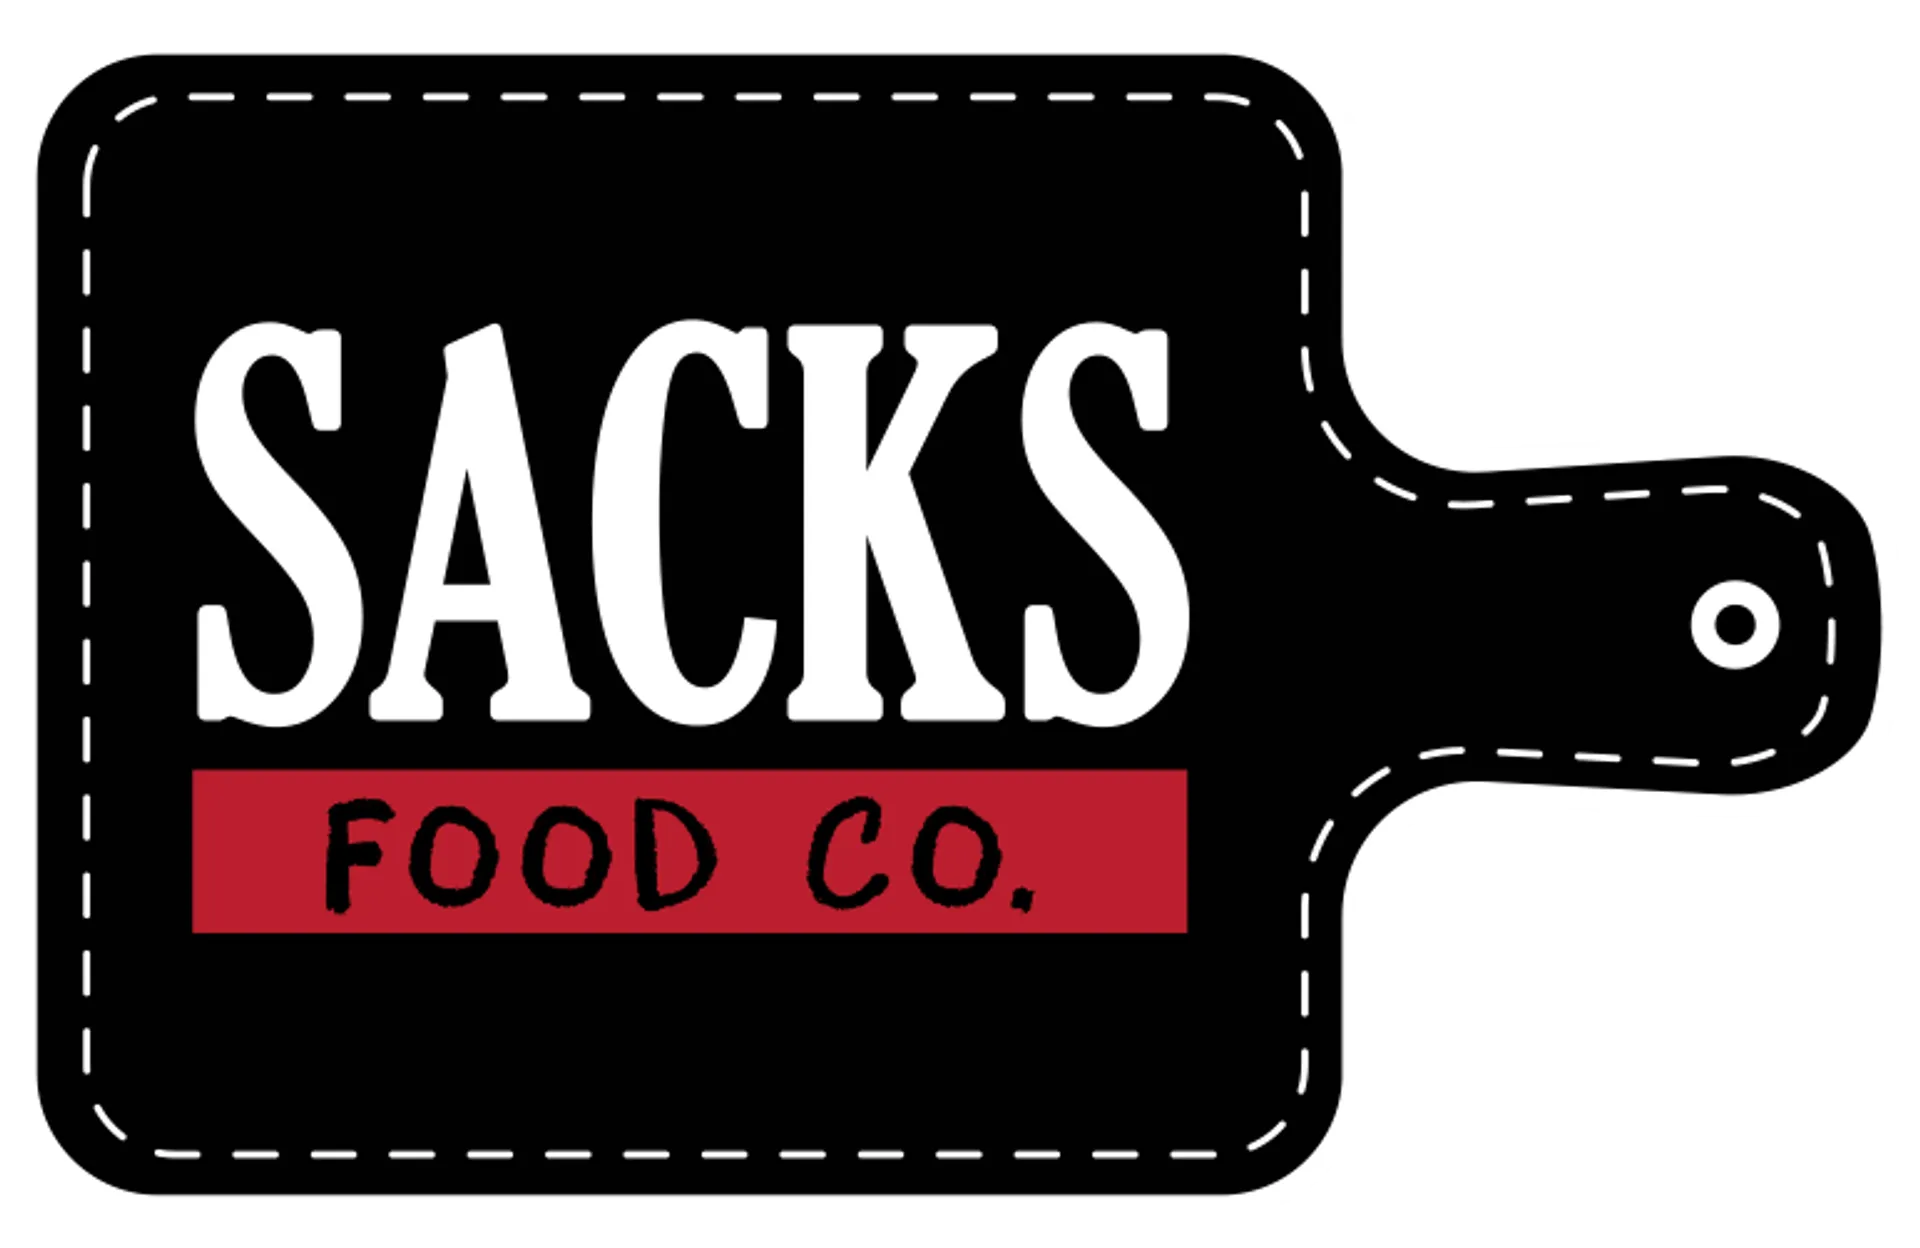 SACKS FOOD CO. logo